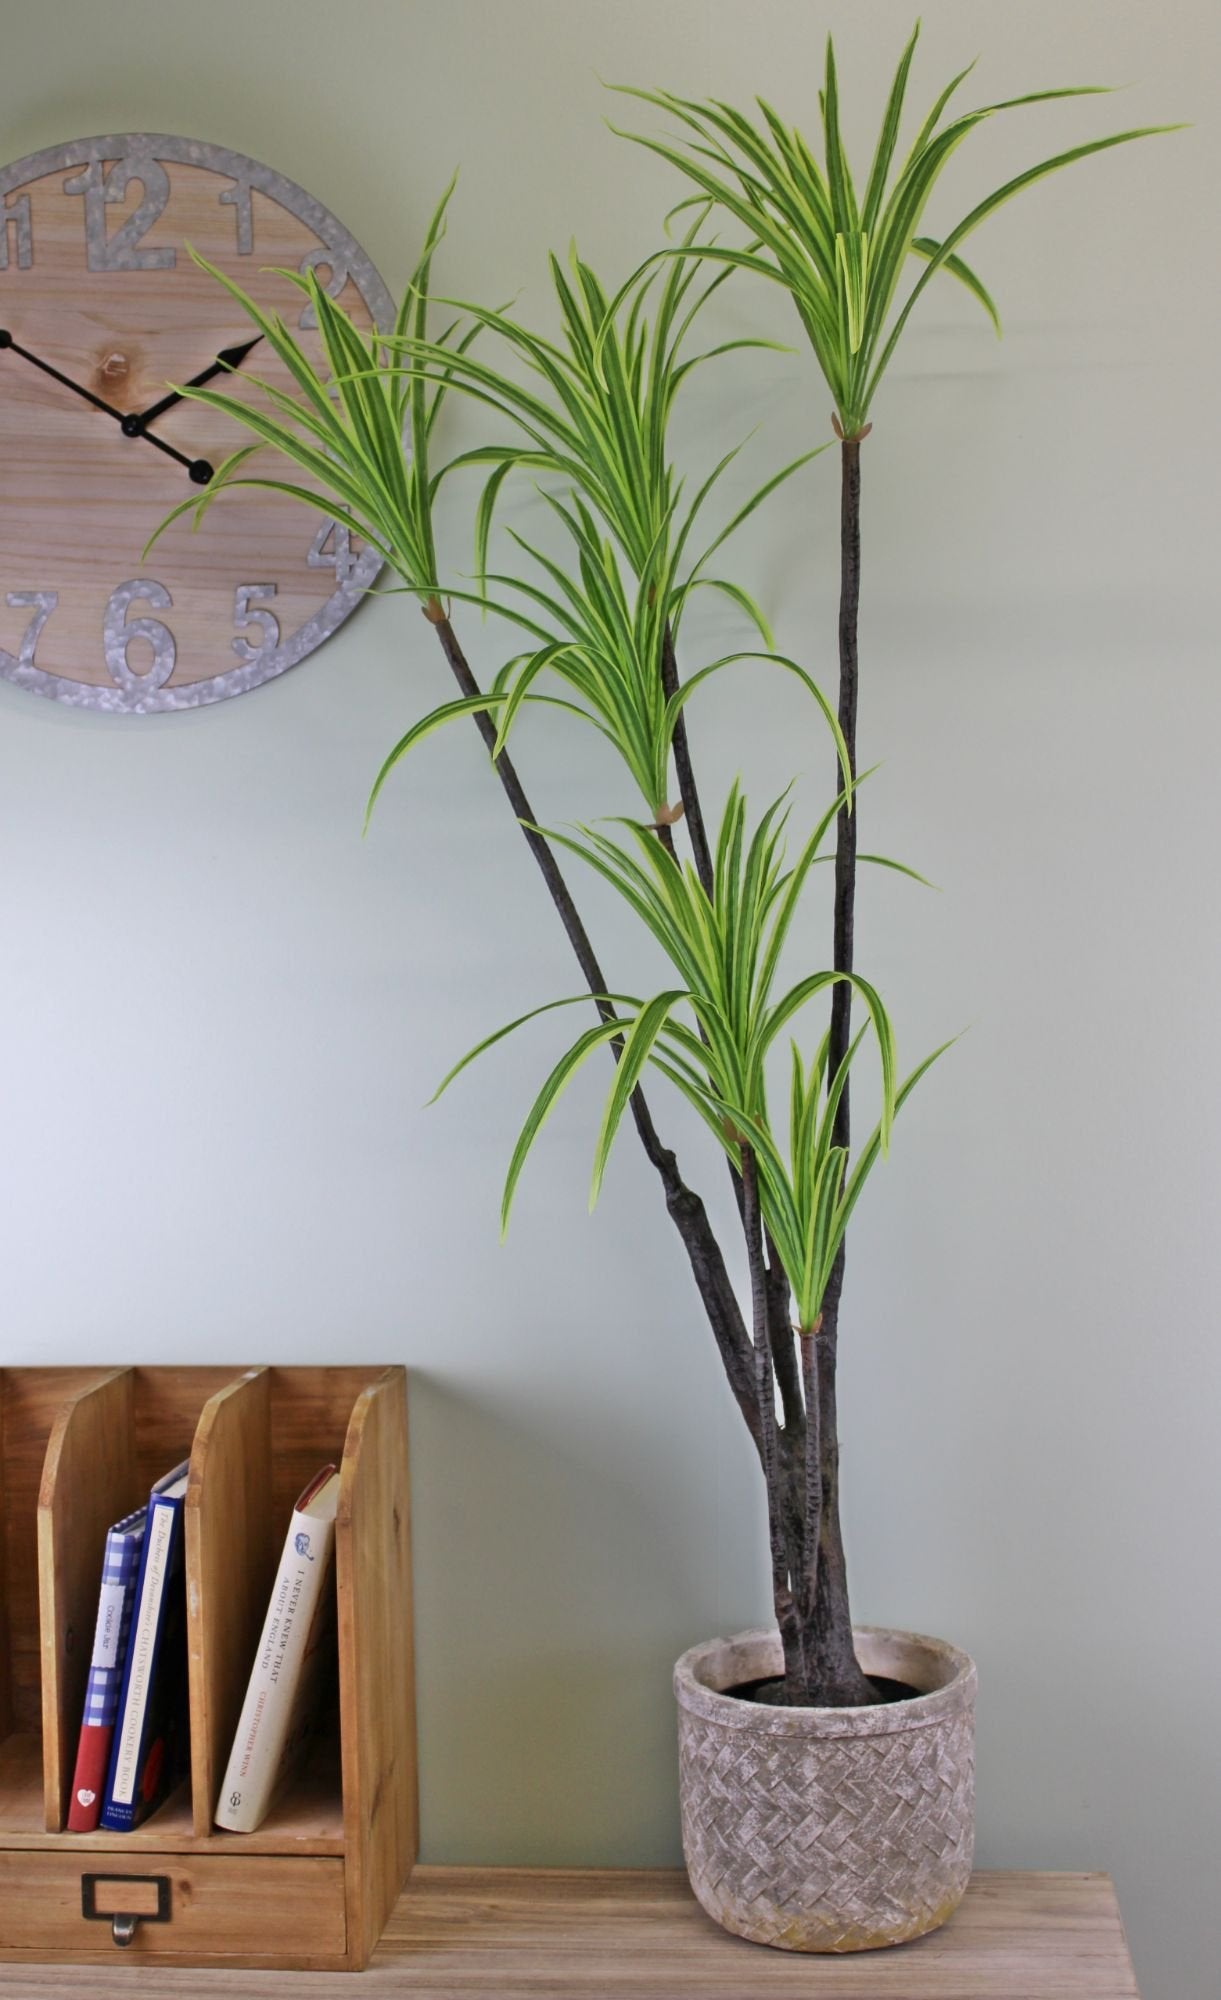 Artificial Dracaena Marginata tree, 120cm tall shown in a living room.